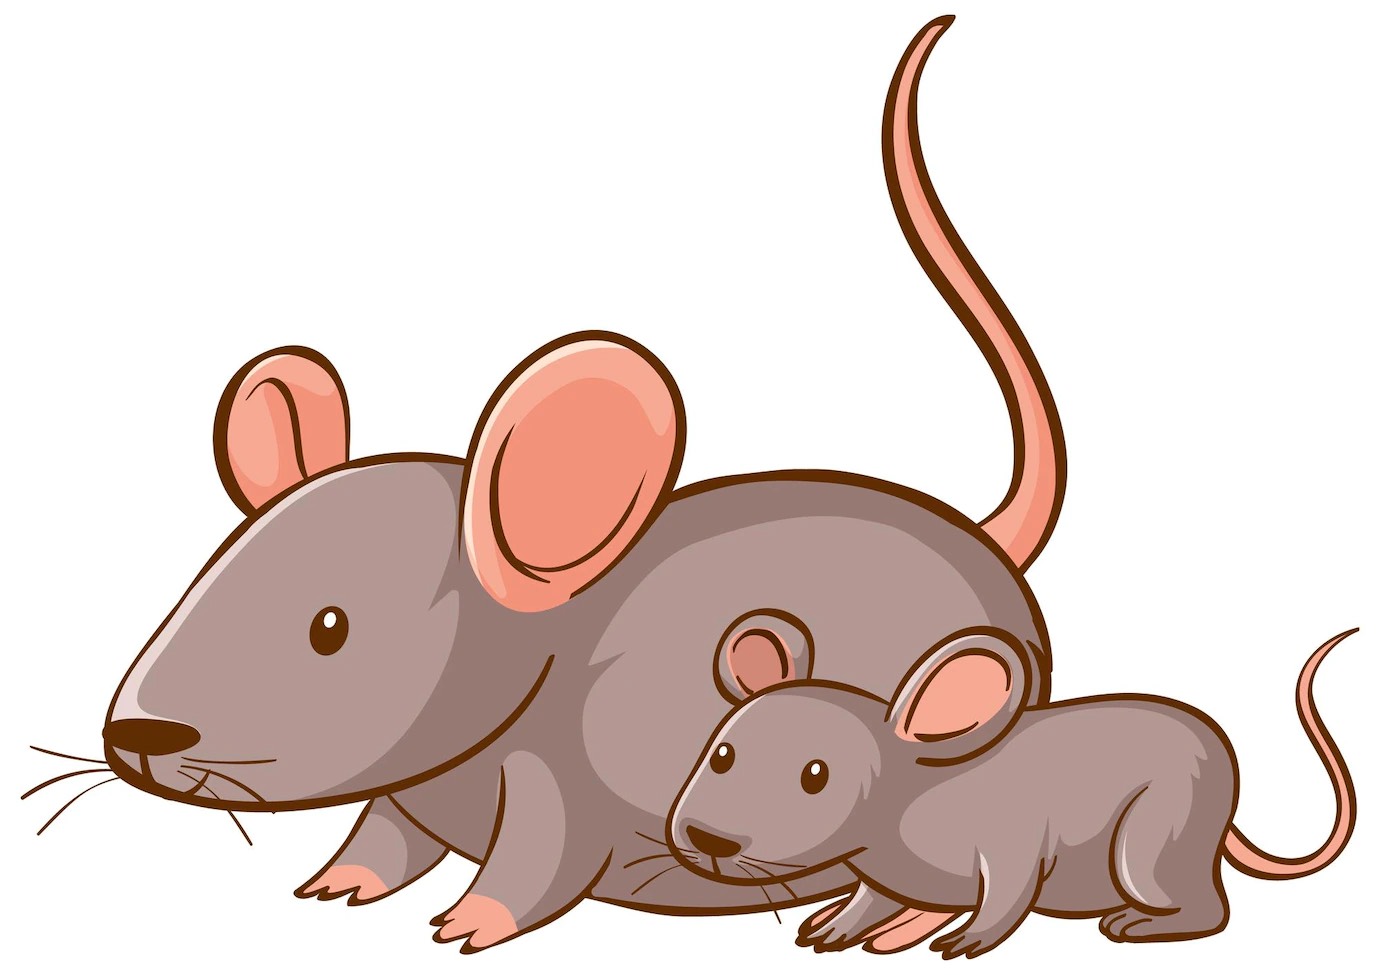 mouse story bookosmia kids